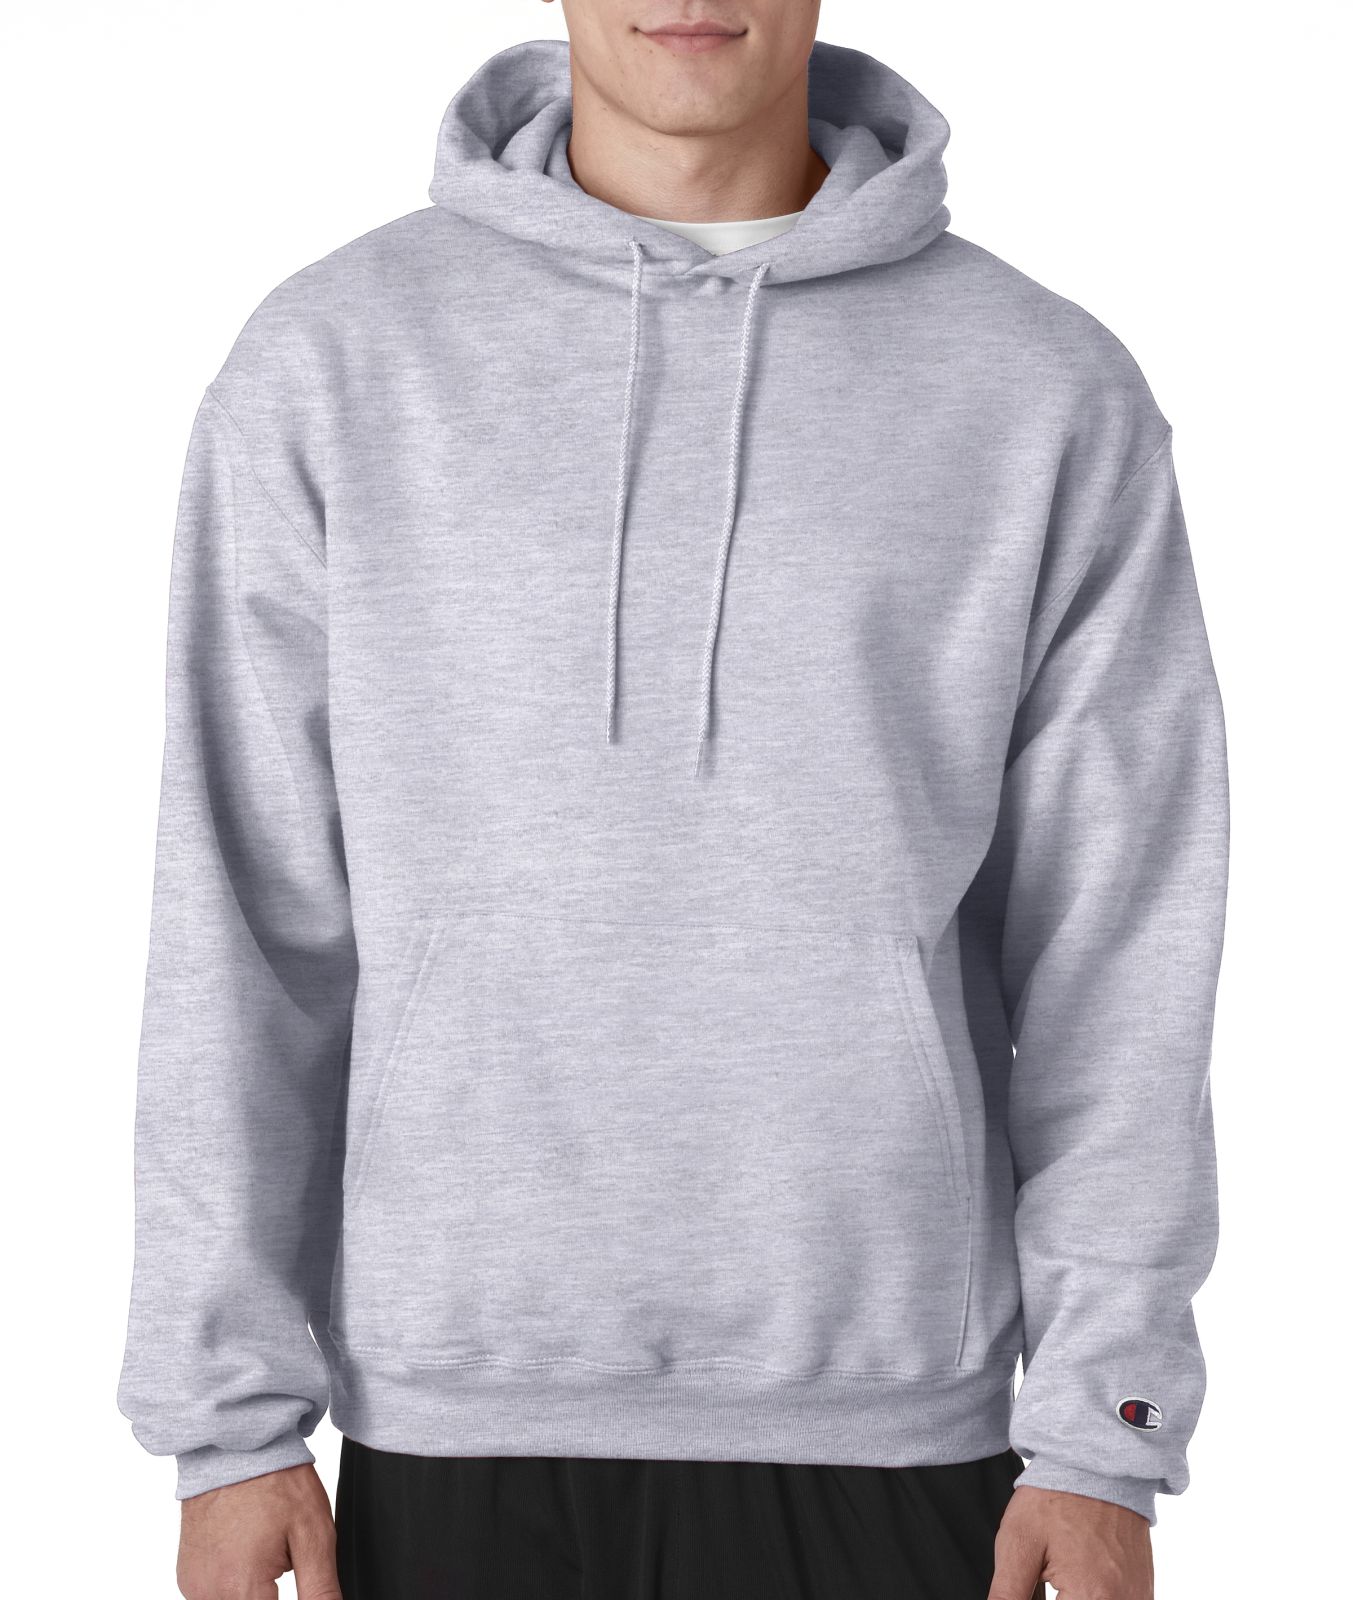 S700 Hoodie Sweatshirt 9 oz. EcoSmart Pullover - image 1 of 3